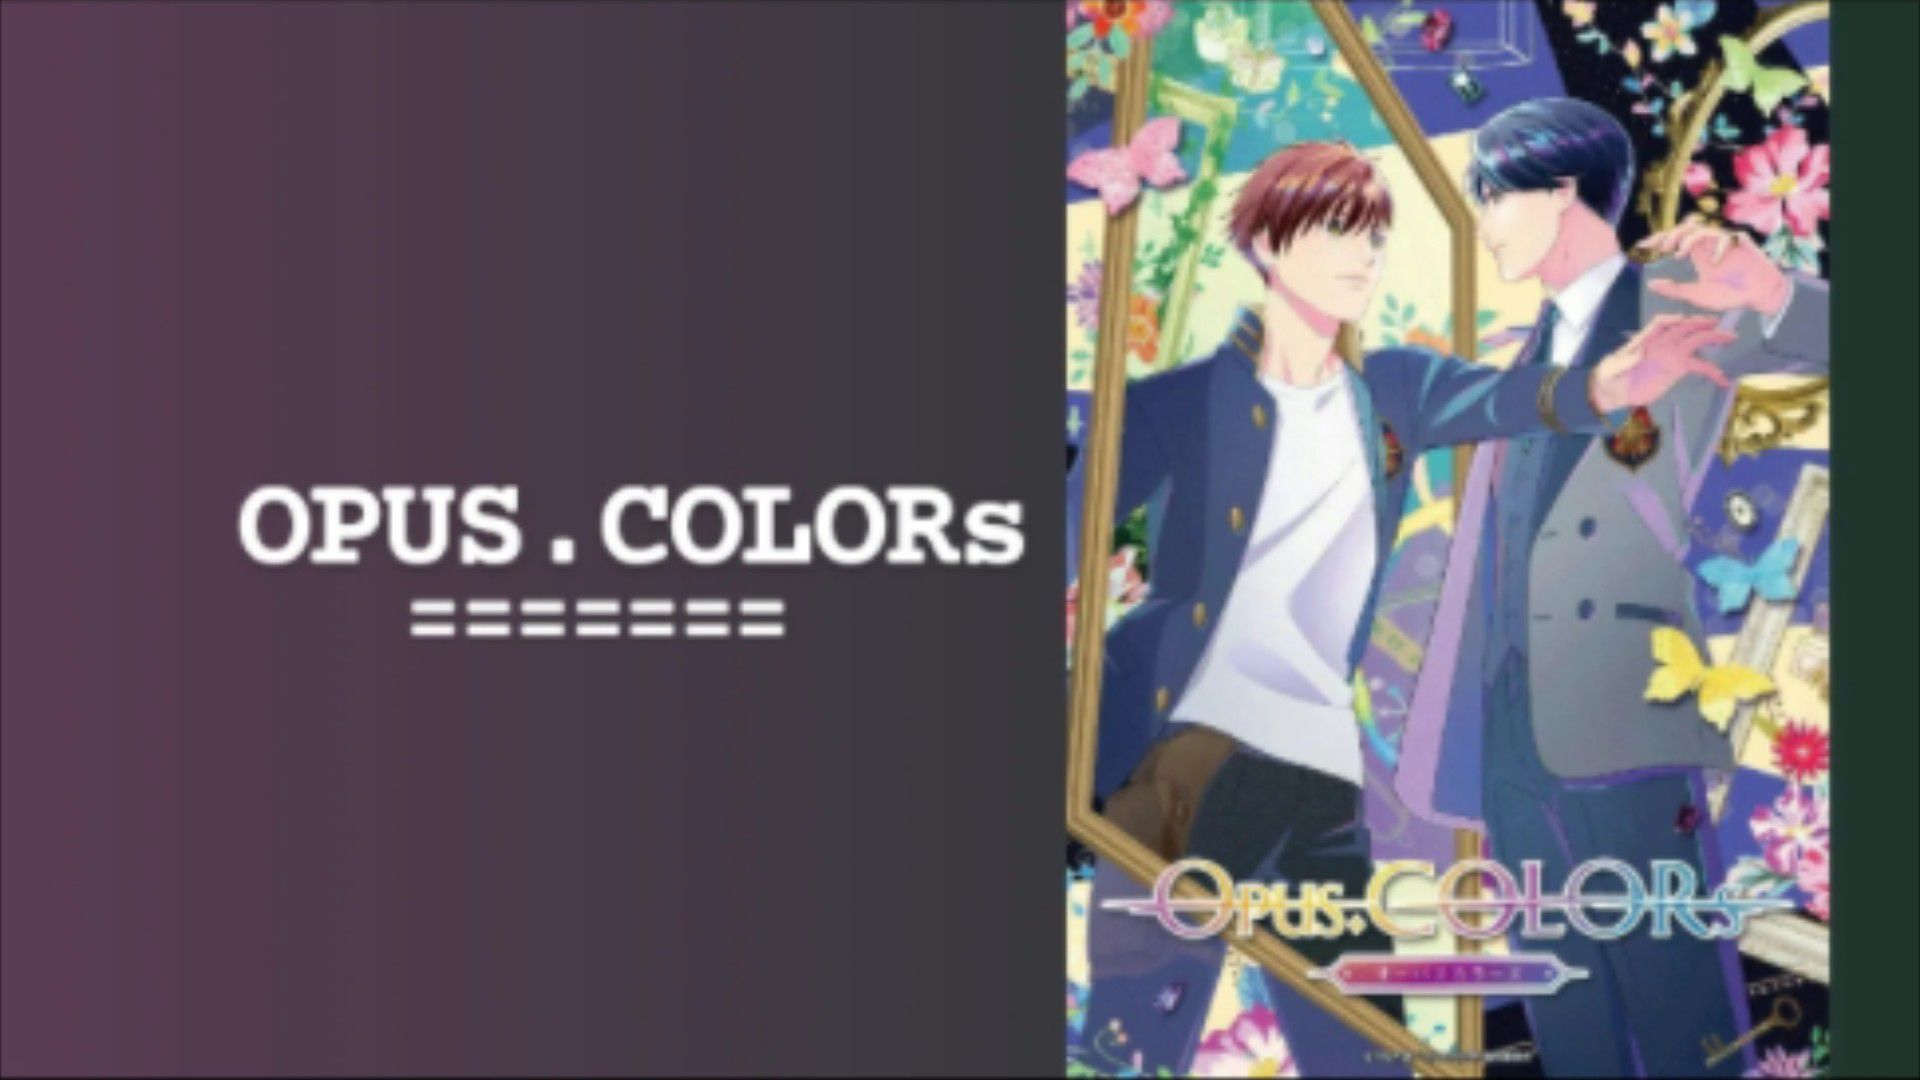 Opus Colors - Wikipedia